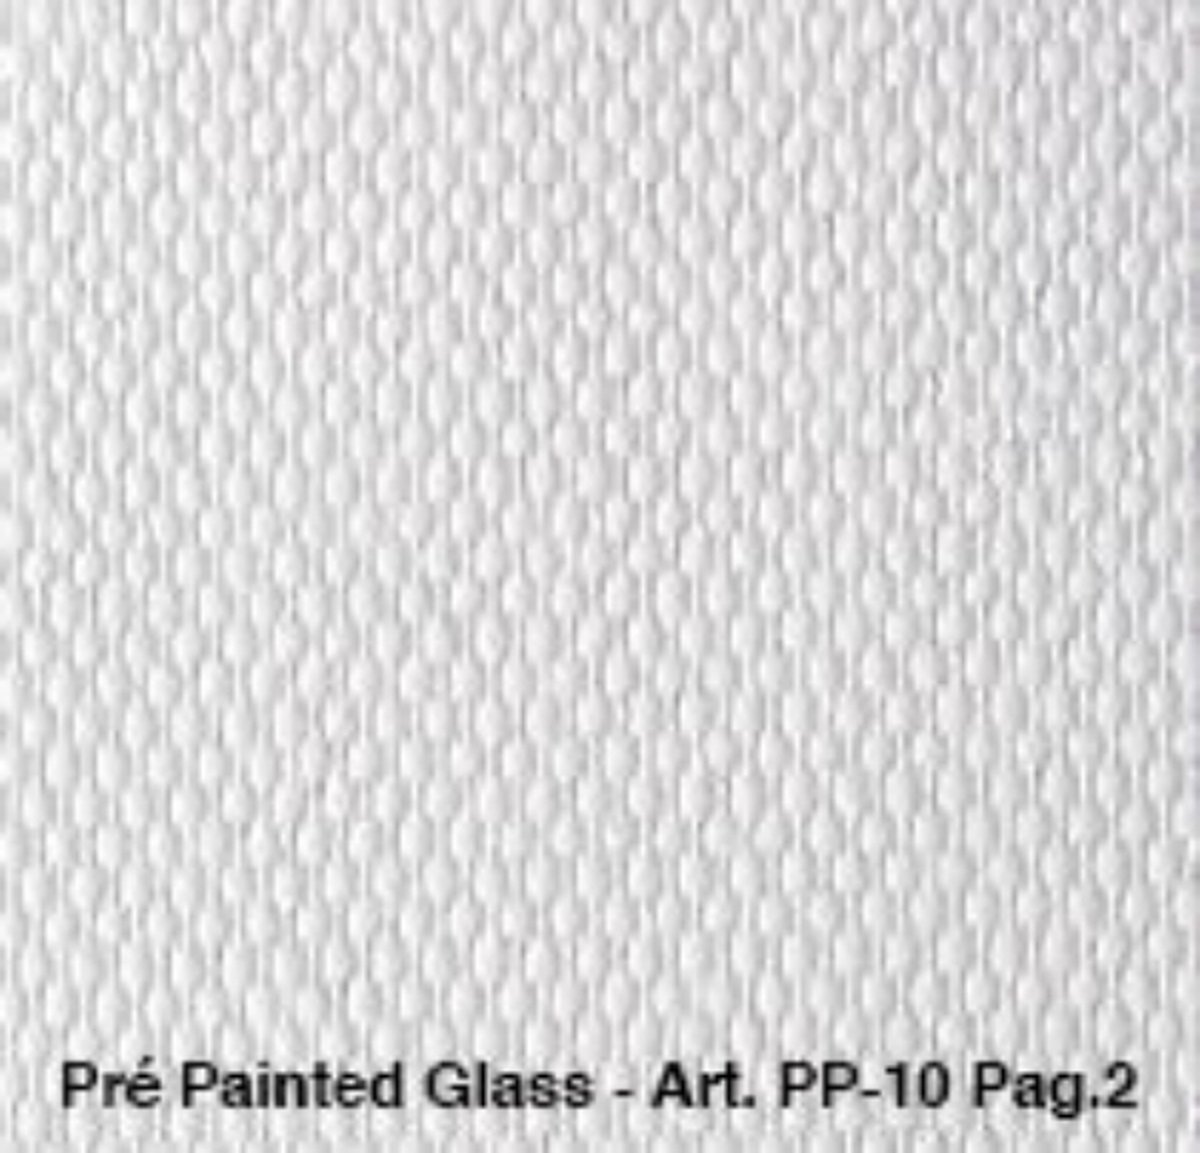 Intervos Glasweefsel 130 gr PP-10 - 1 Rol, 50 mtr